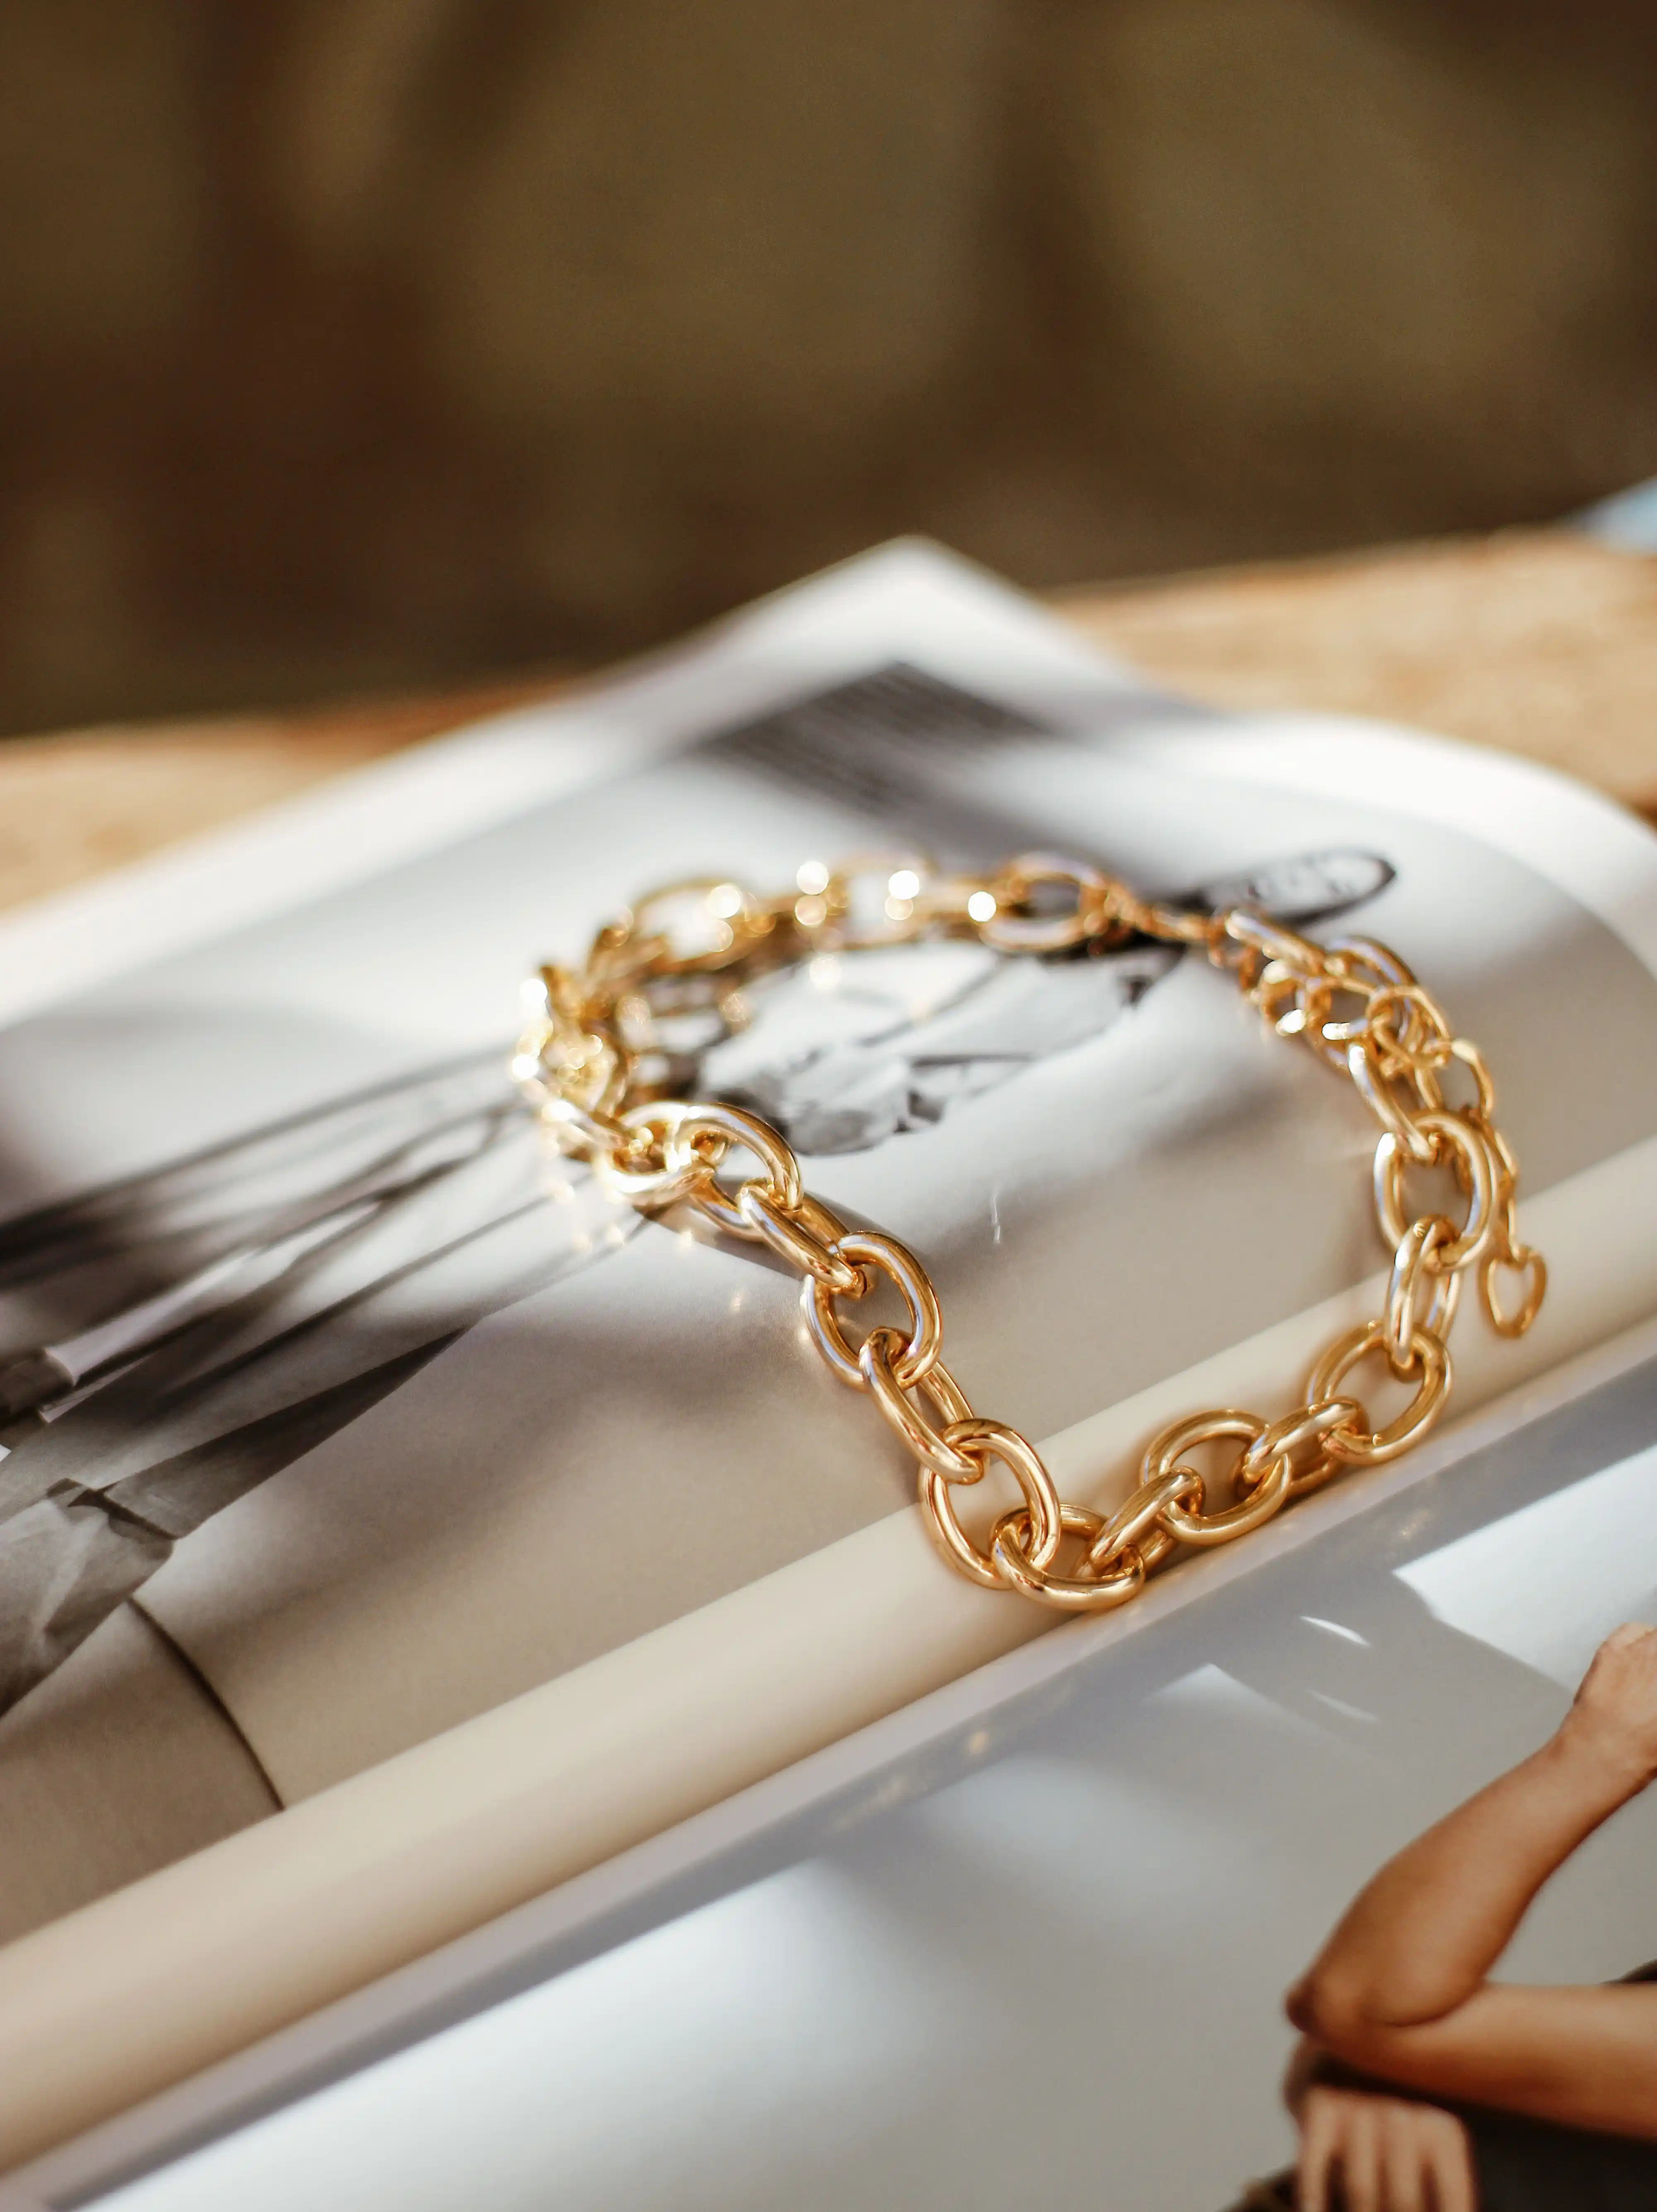 Gold bracelet laid uopn a fashion magazine